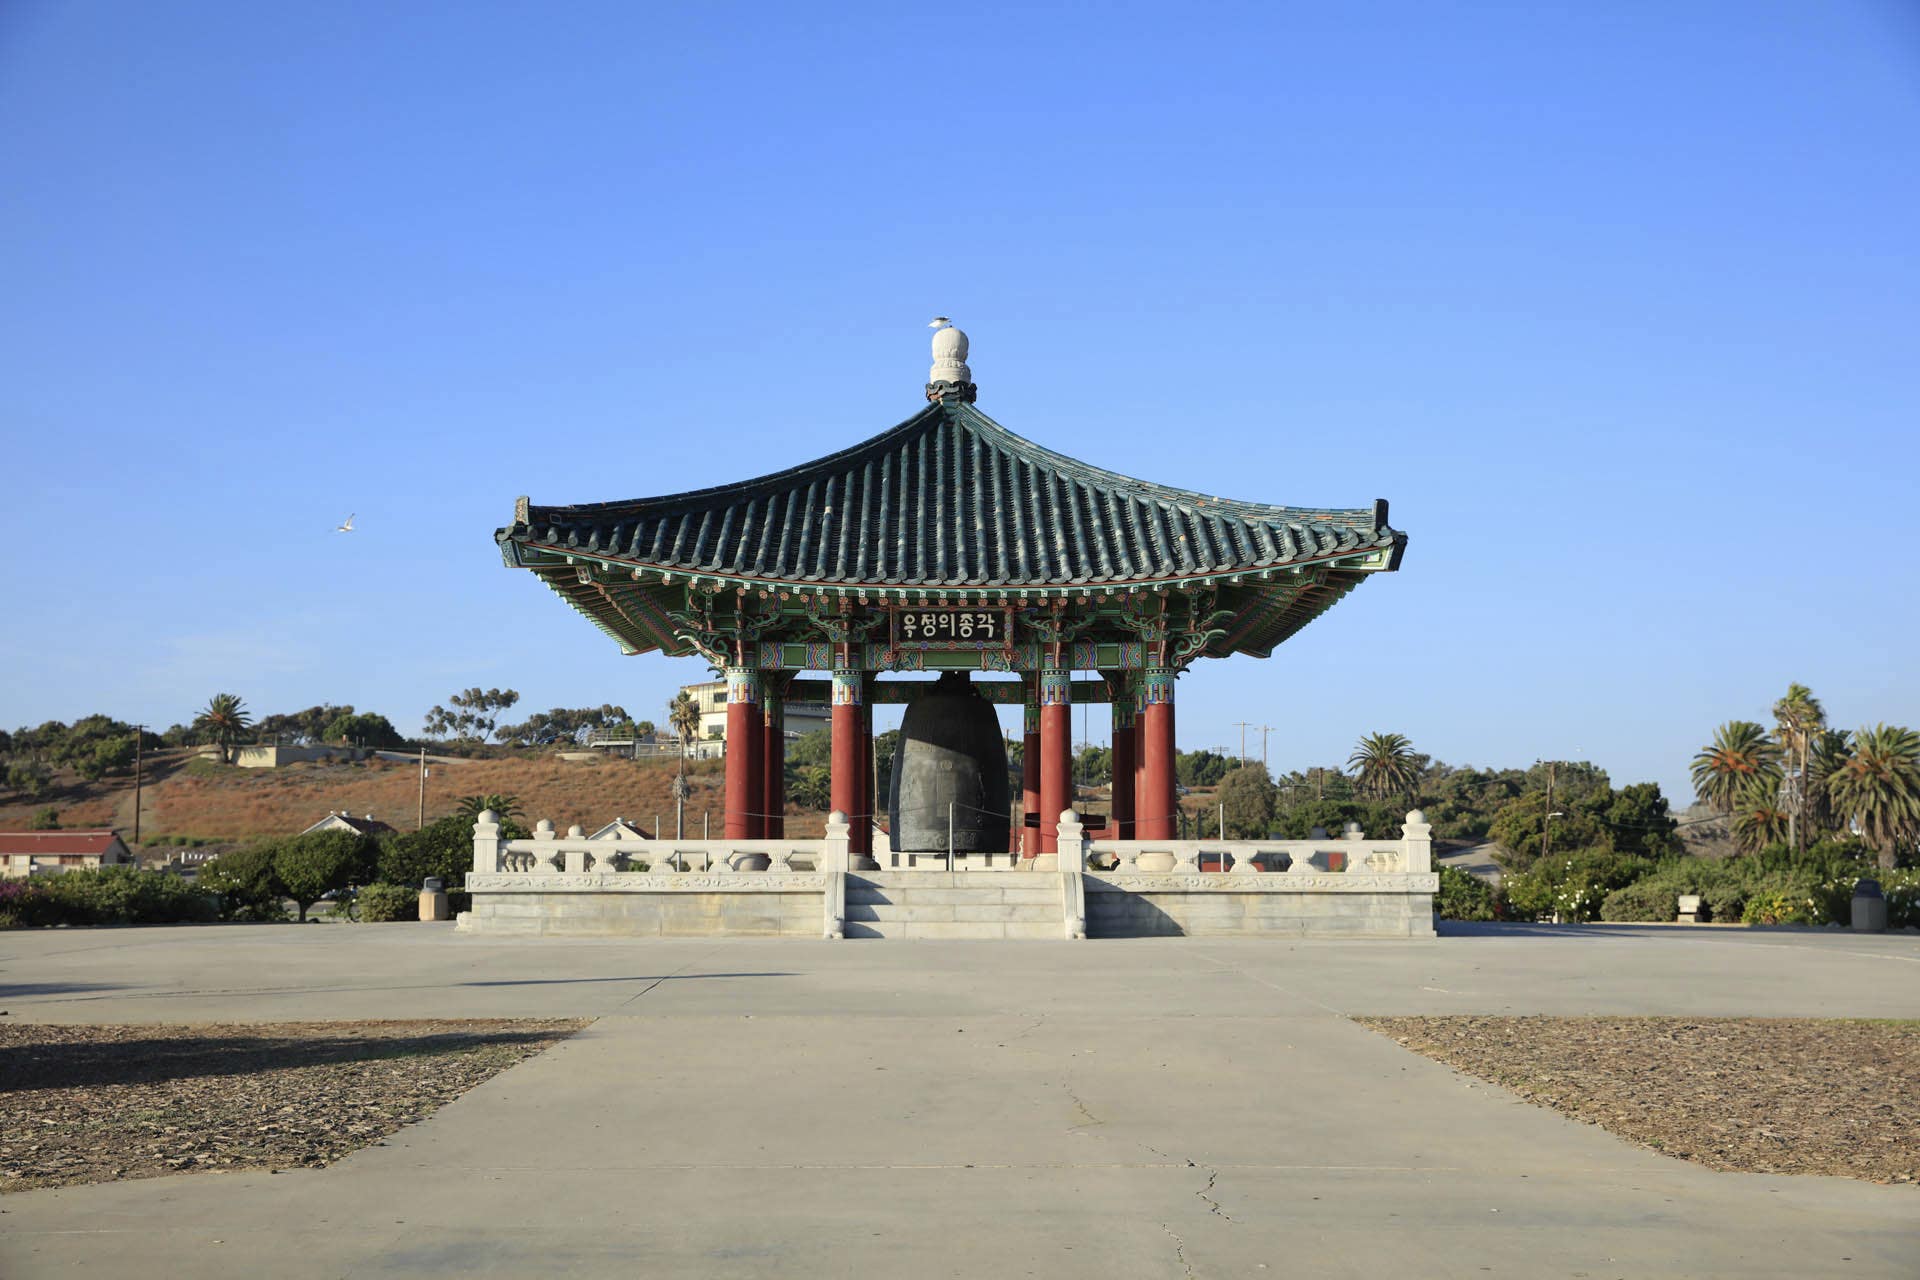 The Korean Bell of Friendship in San Pedro